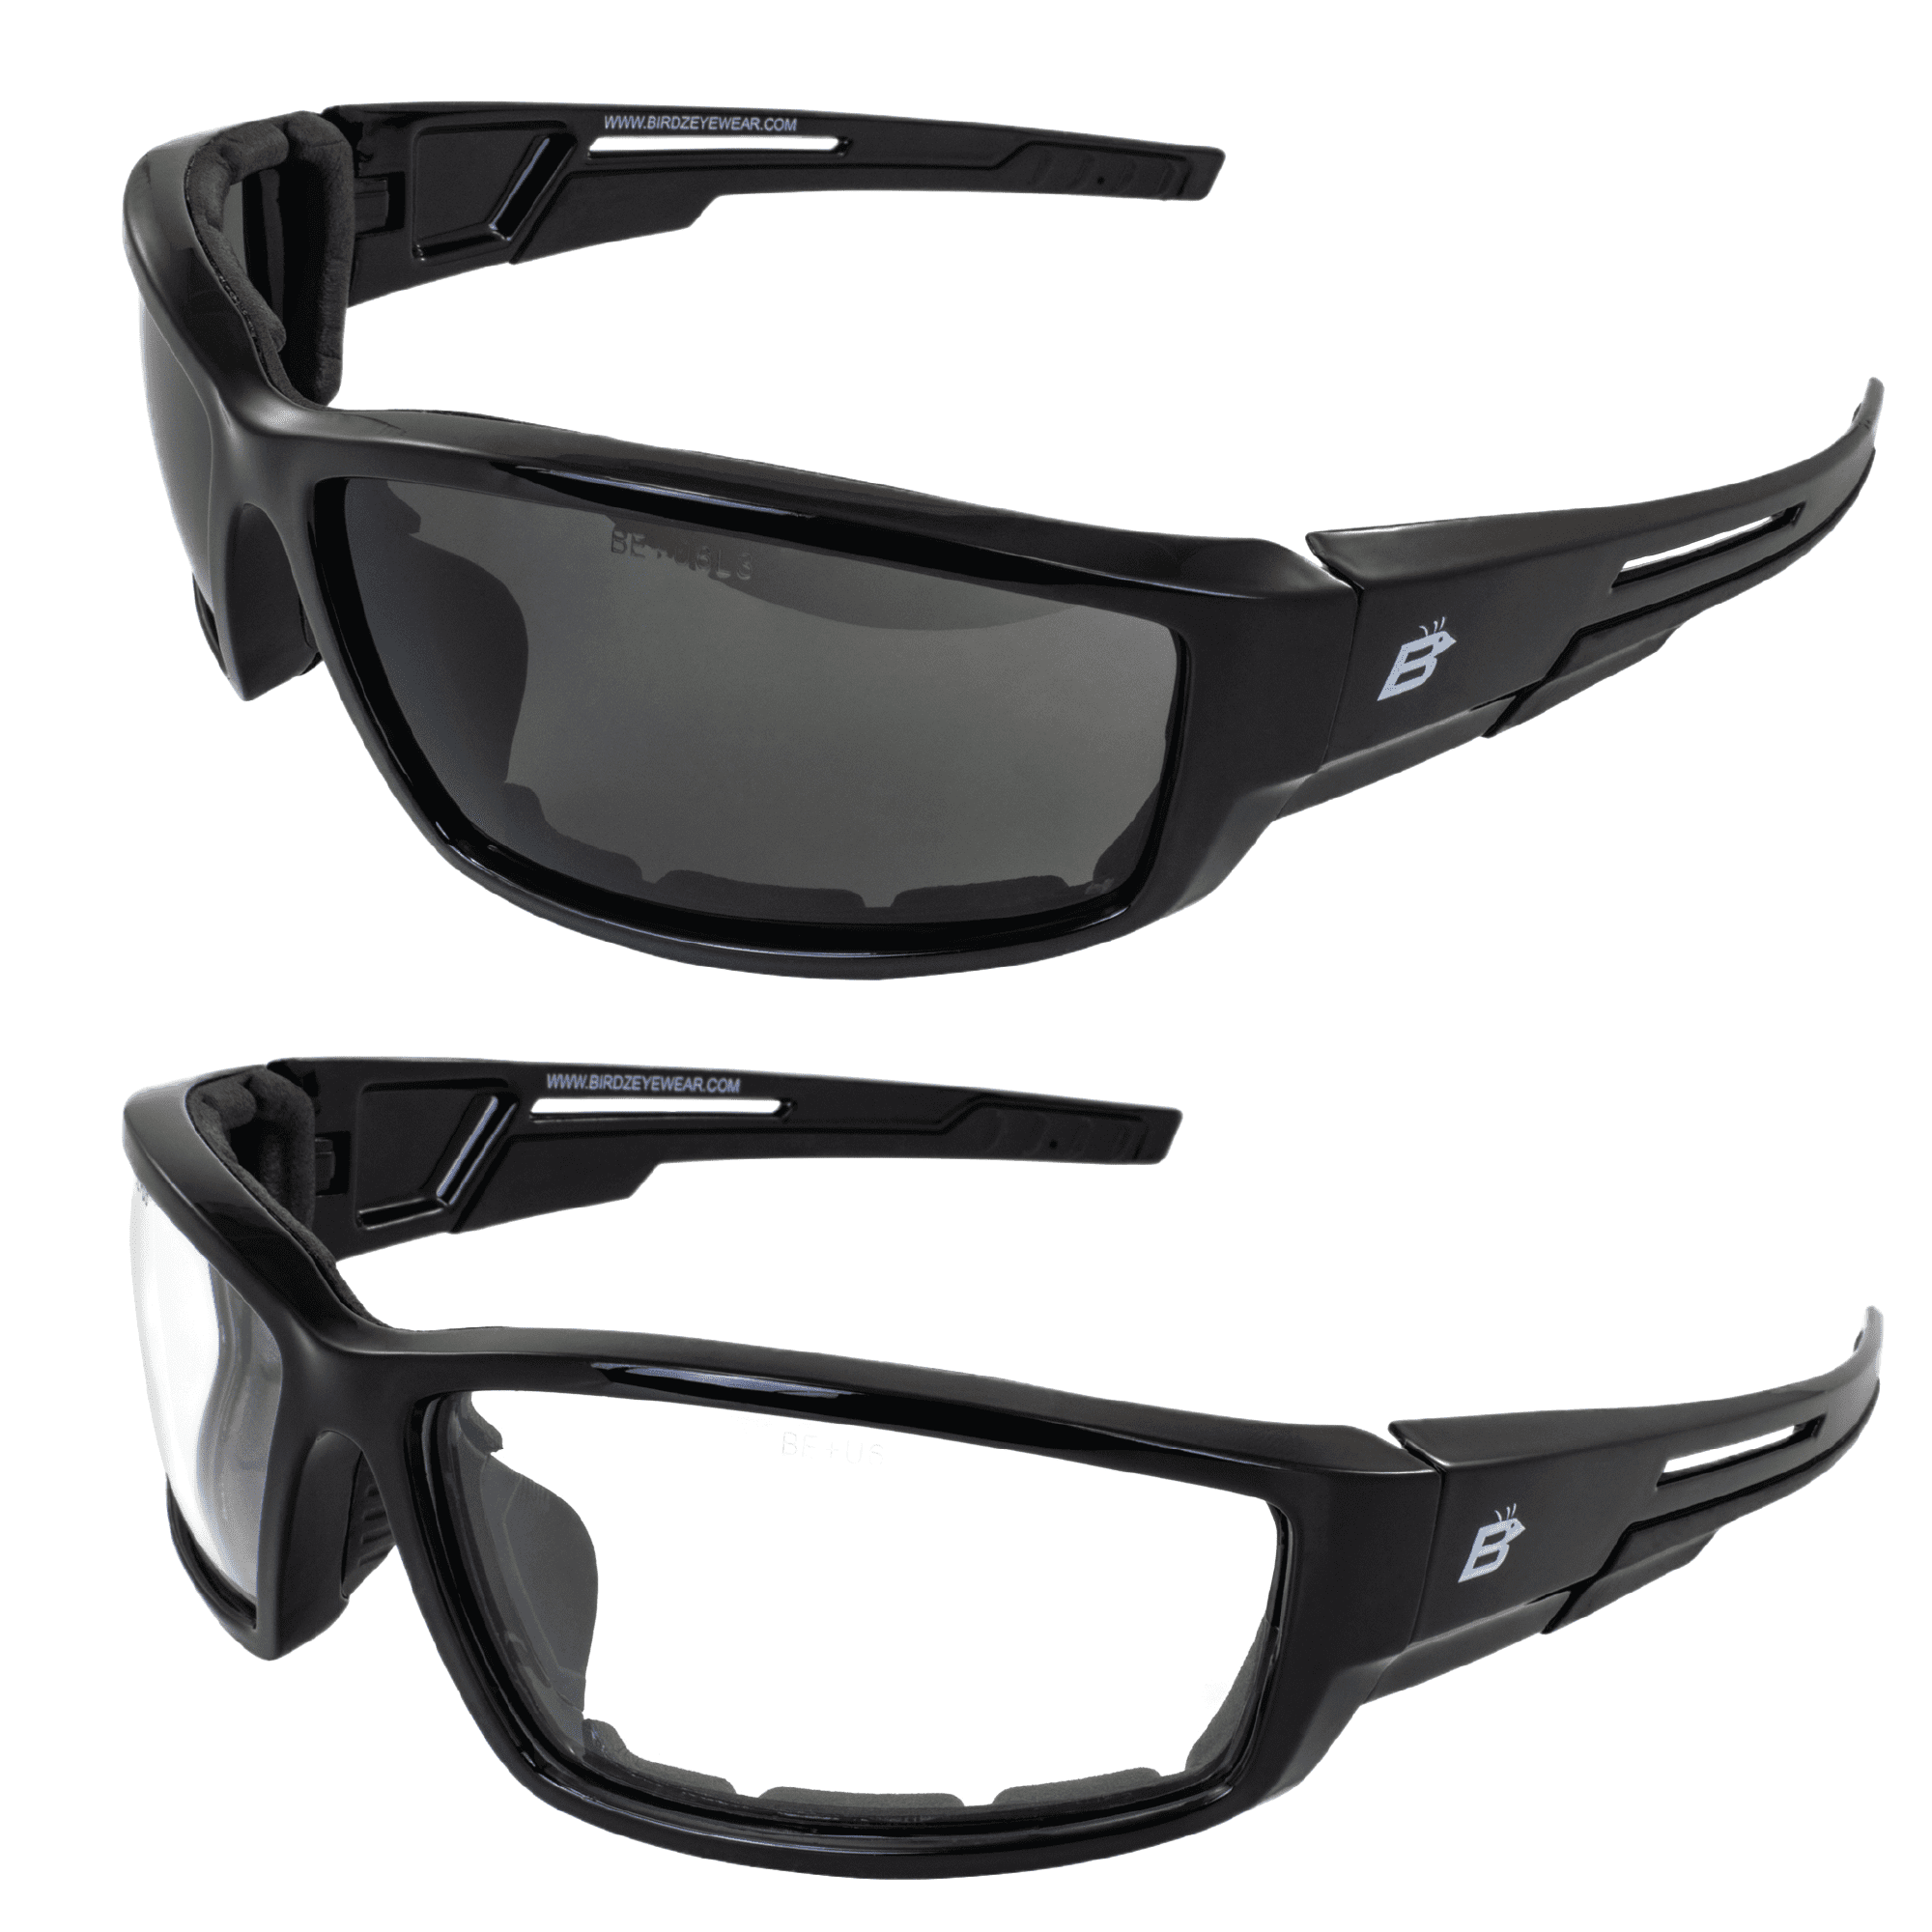 Birdz Eyewear Swoop Anti-Fog Padded Motorcycle Sunglasses Black Frame Smoke Lens 